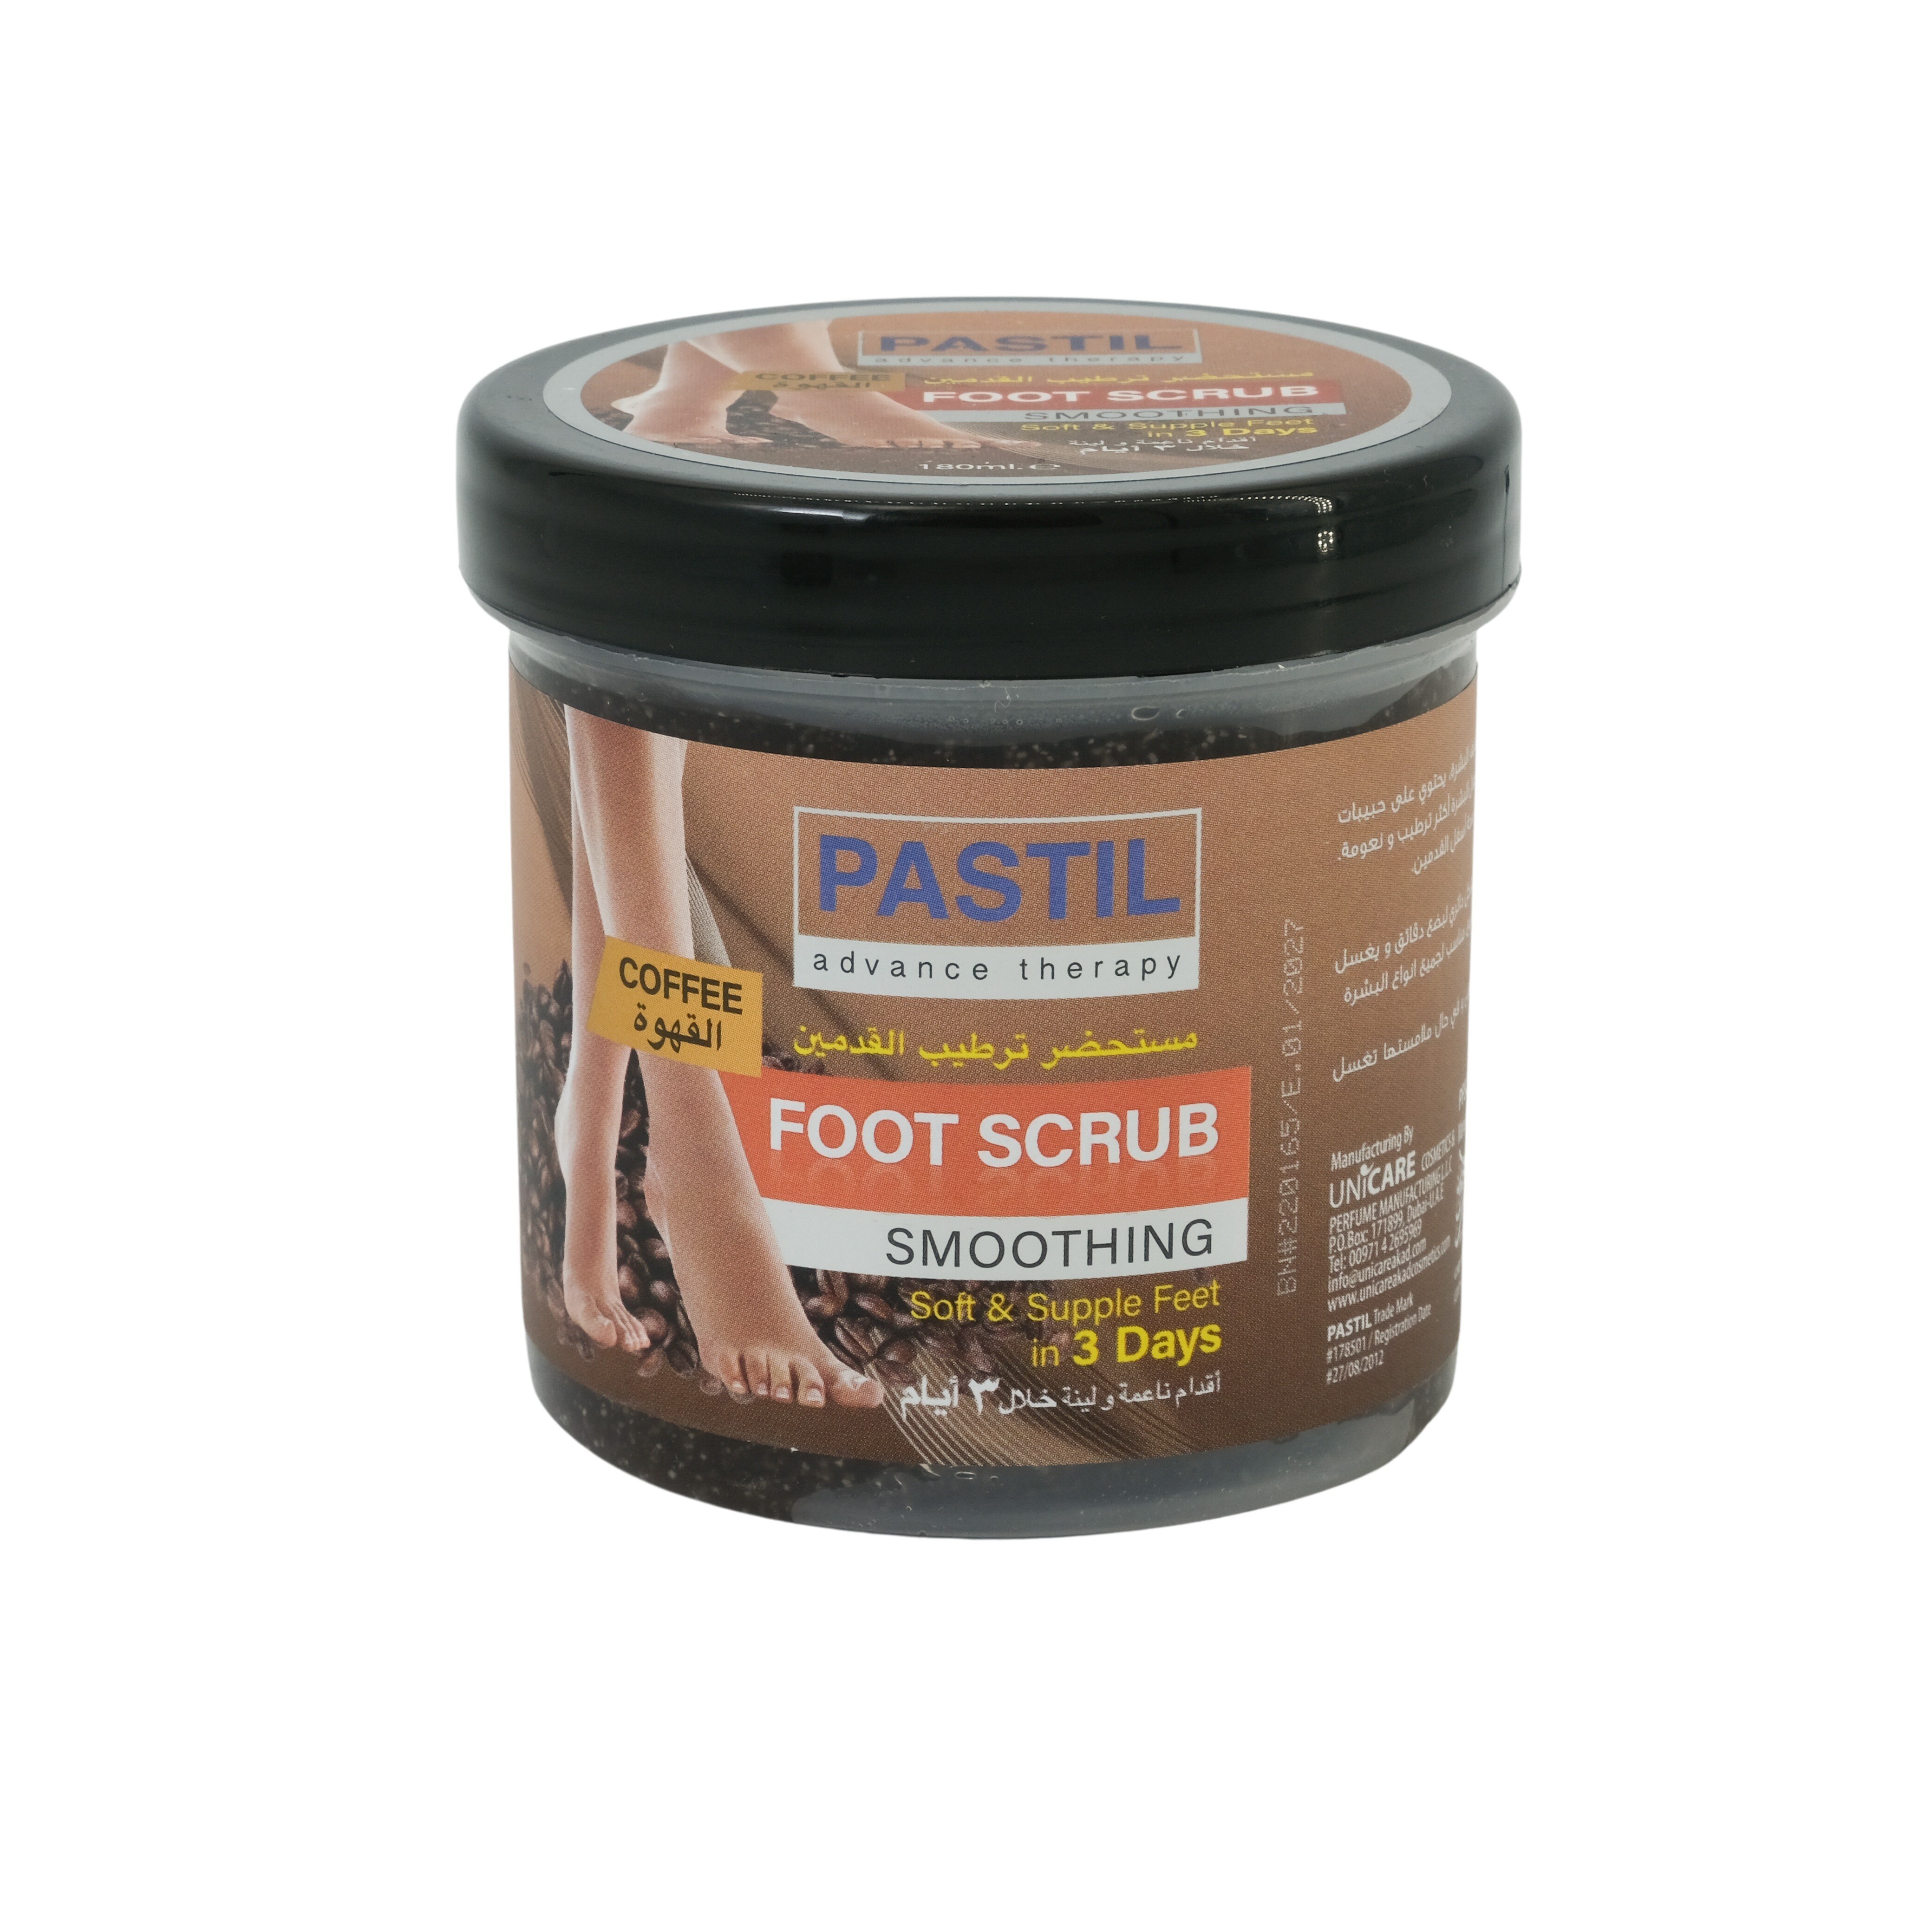 Pastil Coffee Foot Scrub for Soft & Supple Feet, 180ml